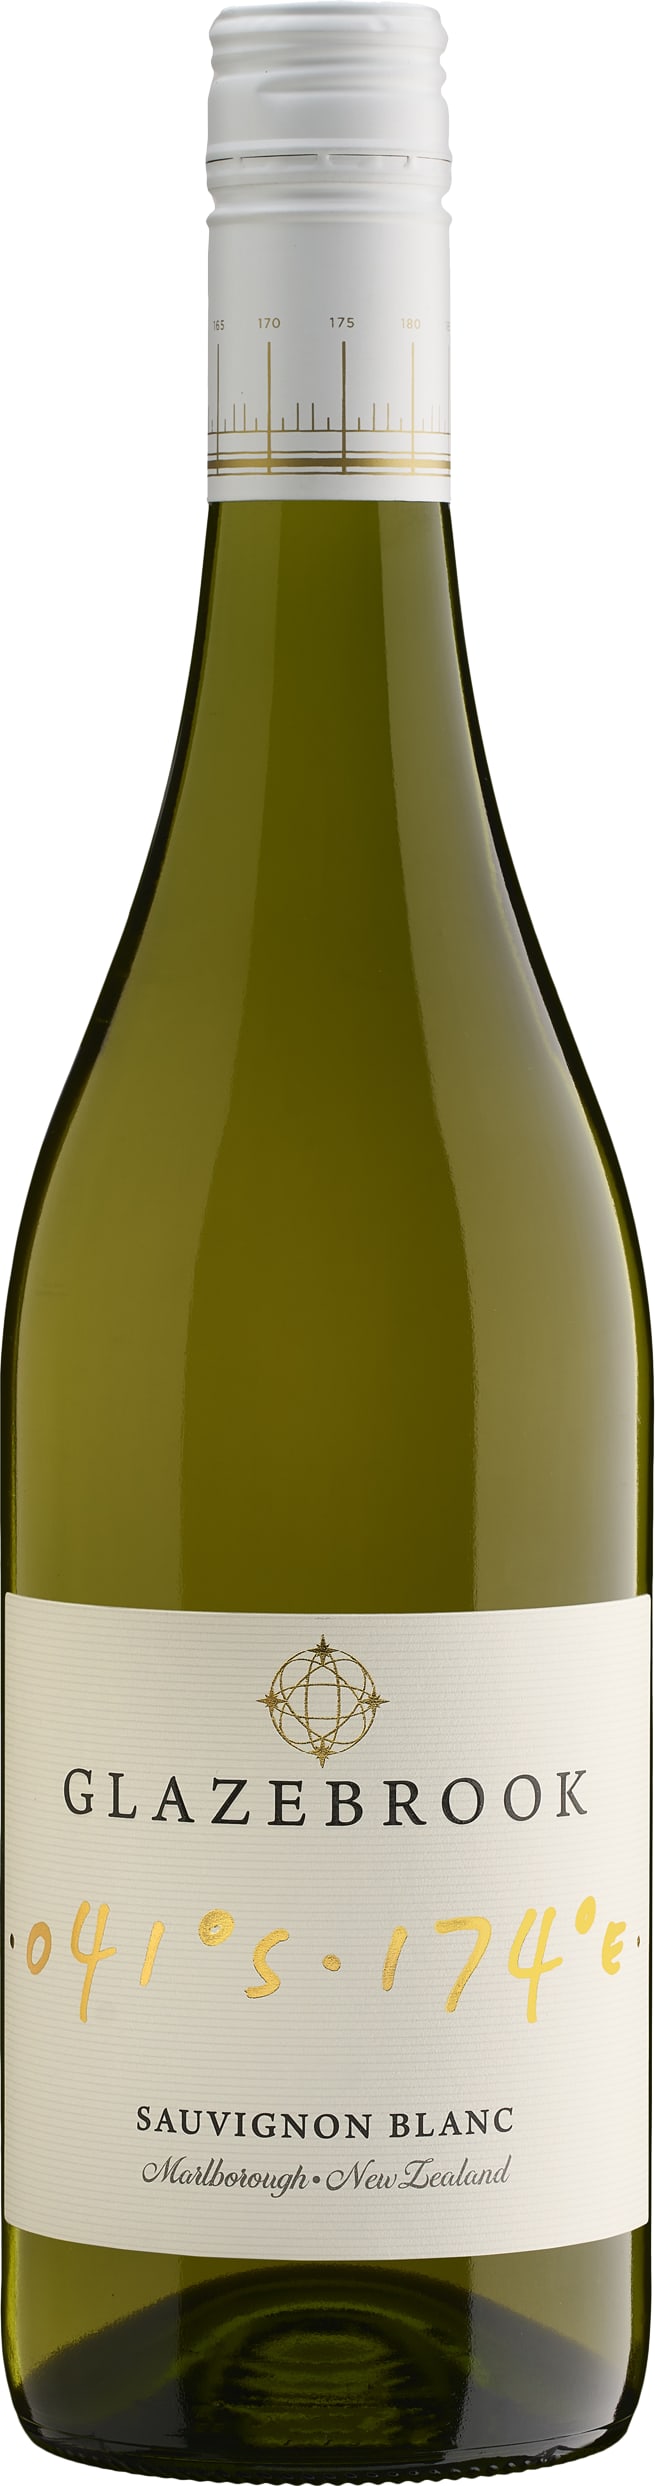 Glazebrook Marlborough Sauvignon Blanc 2023 75cl - Buy Glazebrook Wines from GREAT WINES DIRECT wine shop